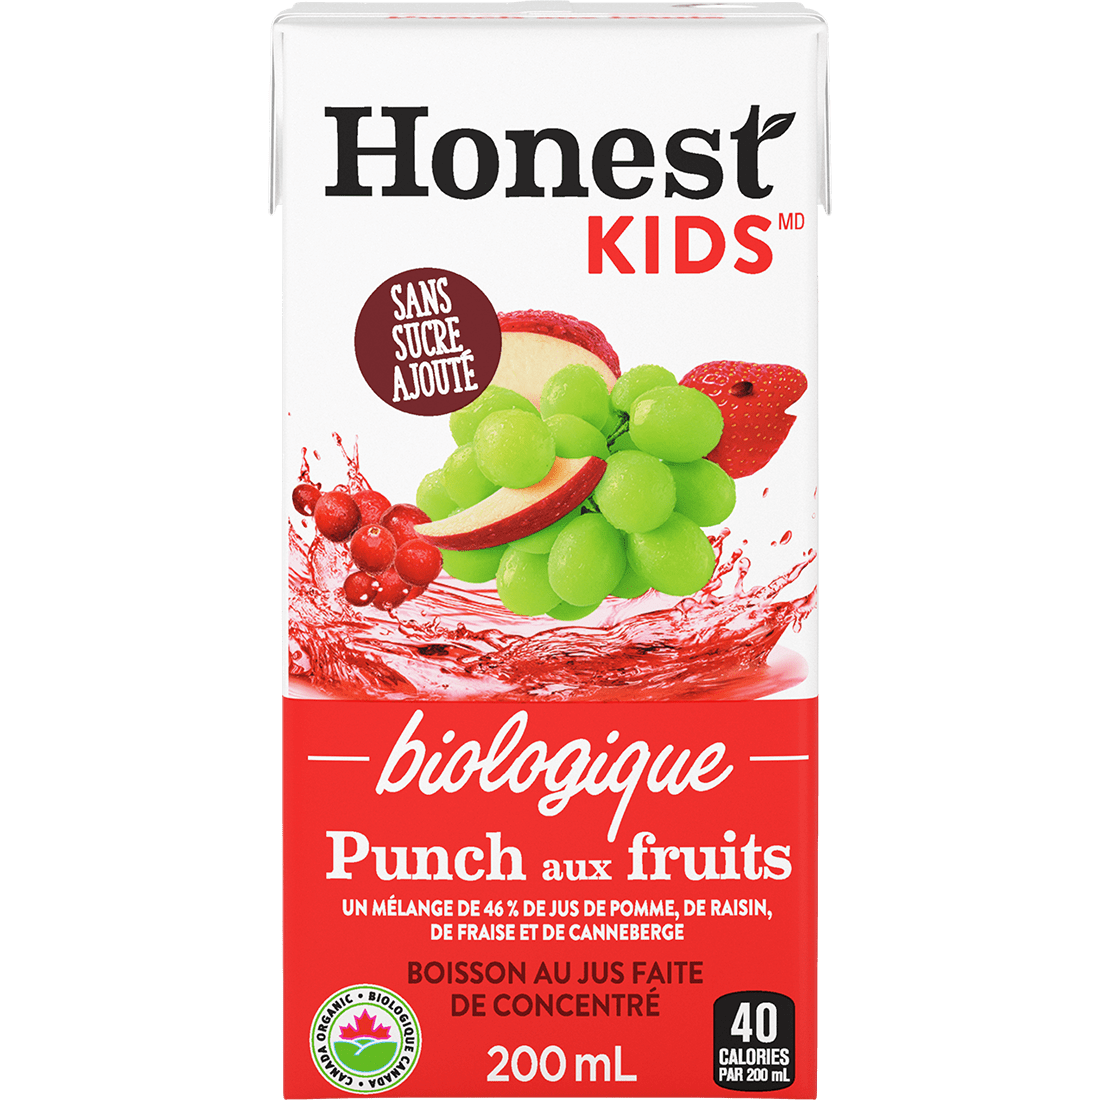 Honest Kids Punch aux fruits 200 mL emballage